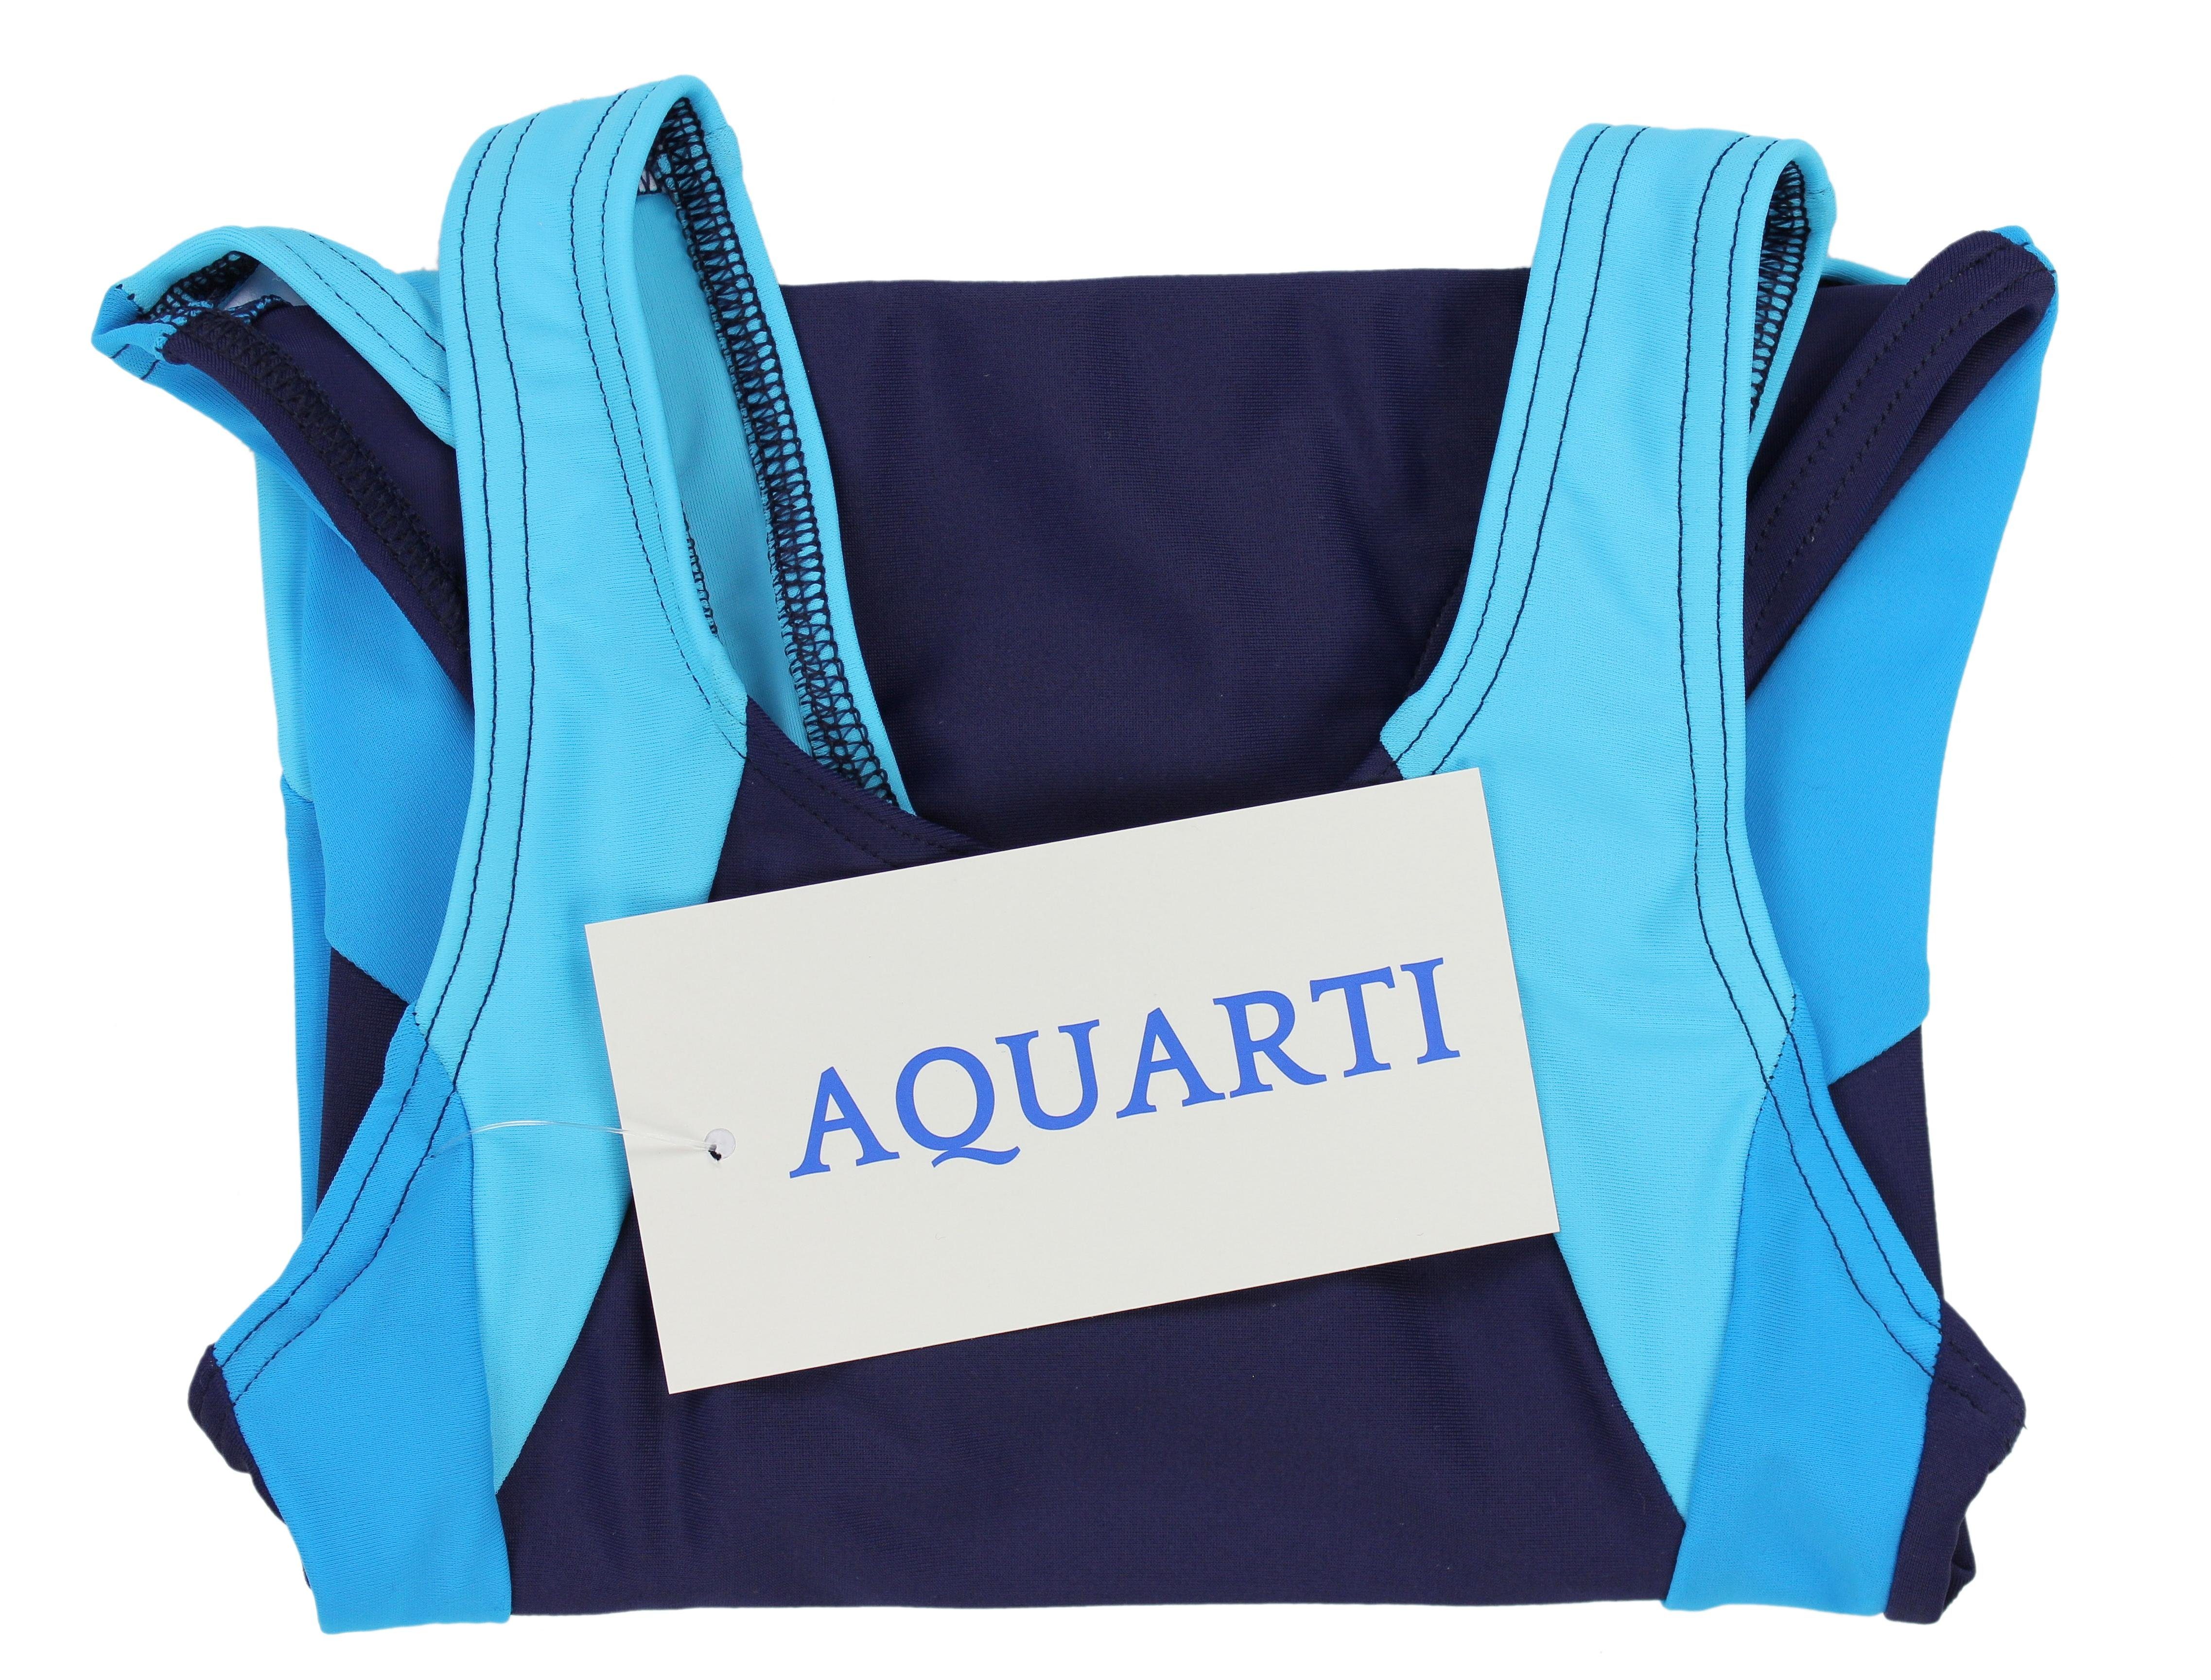 Aquarti Aquarti Mädchen Badeanzug Himmelblau / Ringerrücken / Dunkelblau mit Badeanzug Türkis